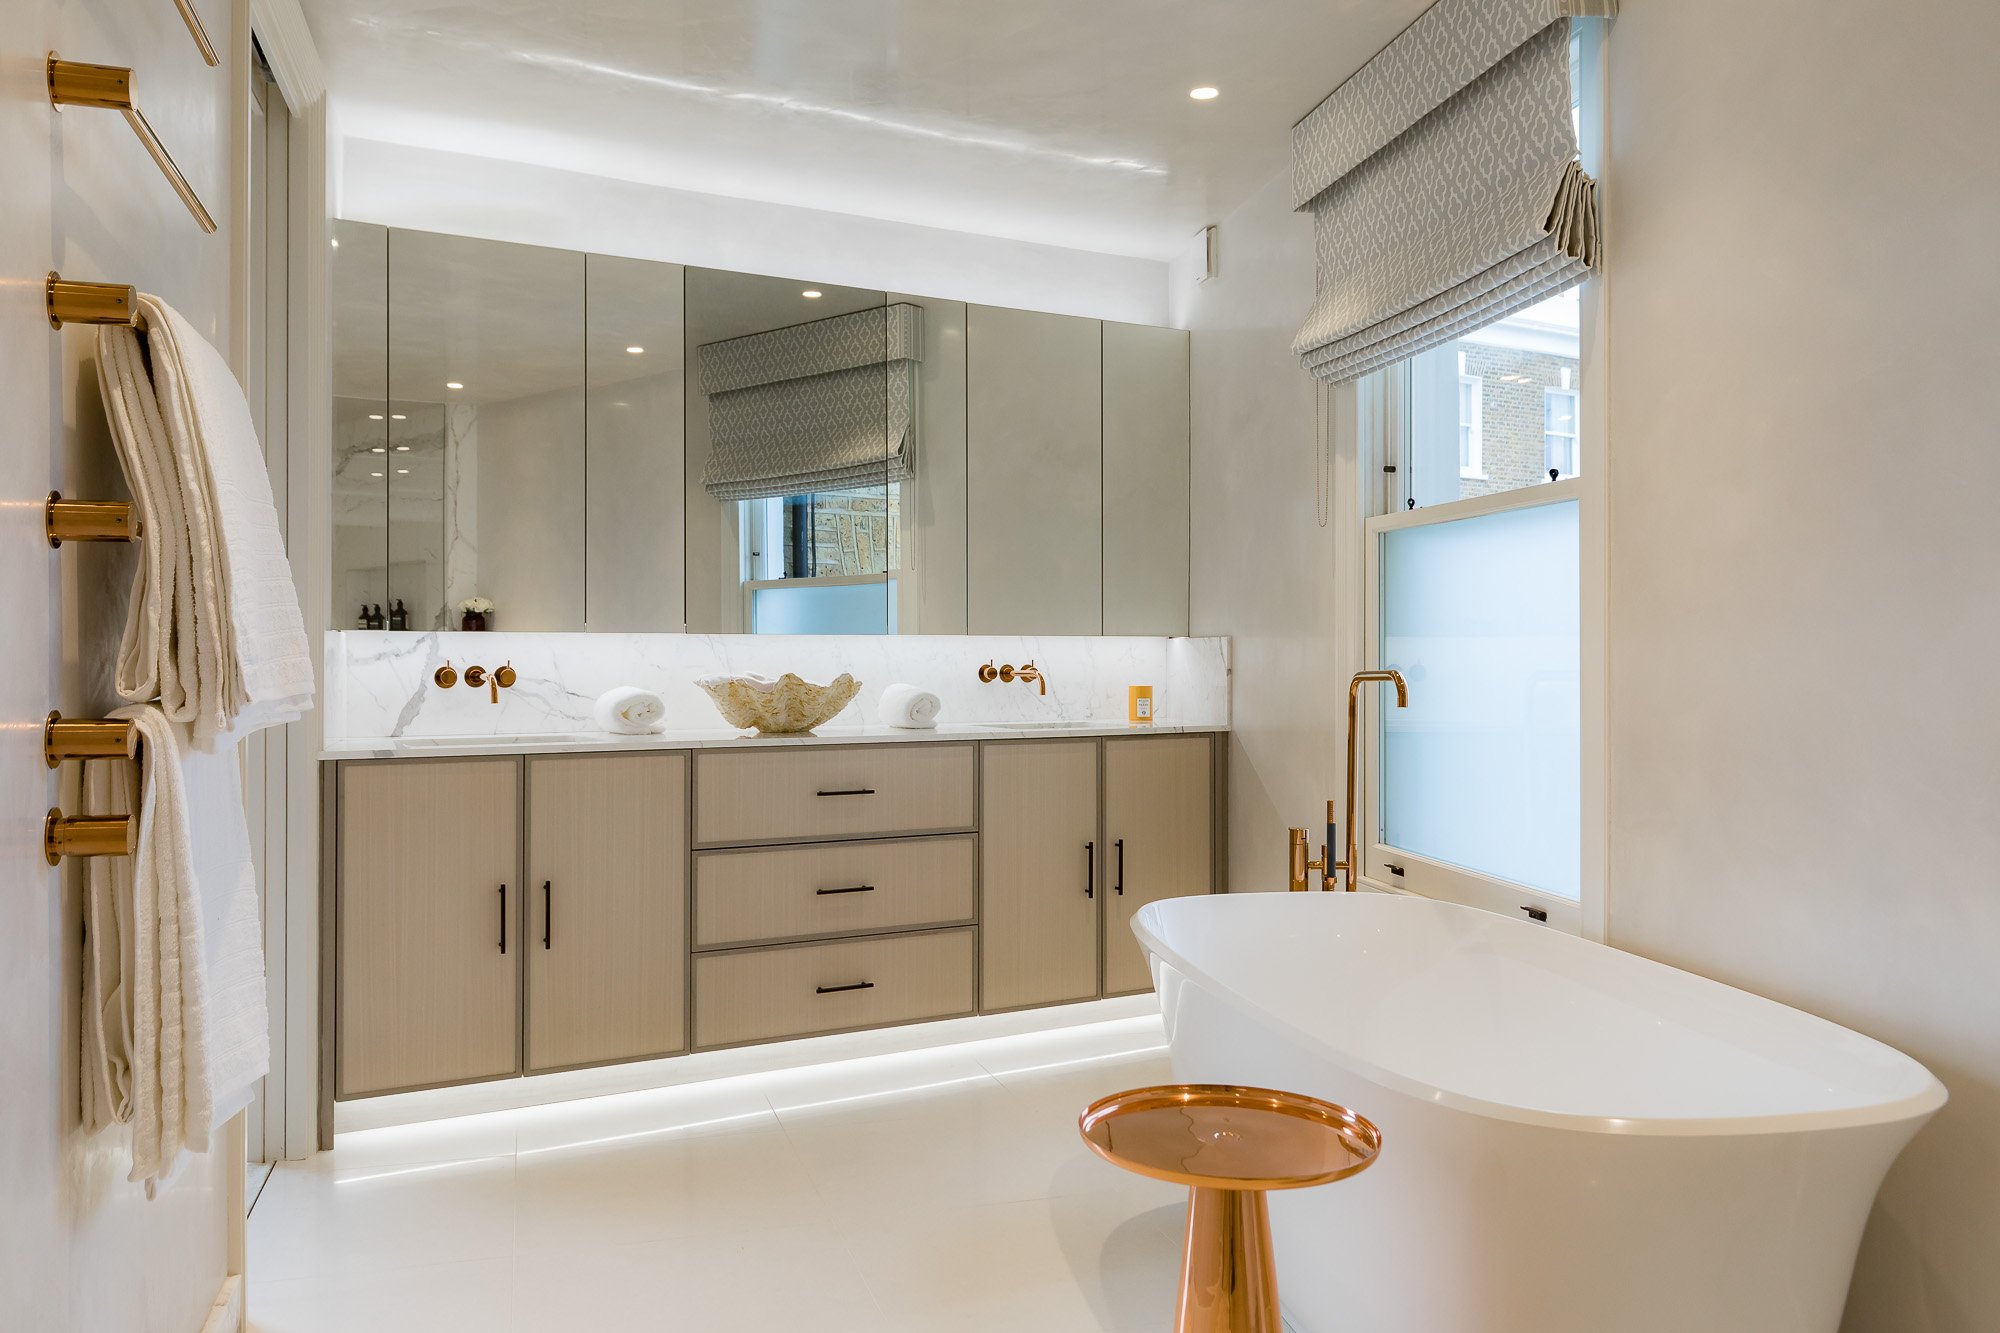 Luxury Chelsea based interior designer  Juliette Byrne Delivered this stunning white &amp; cream luxury bathroom